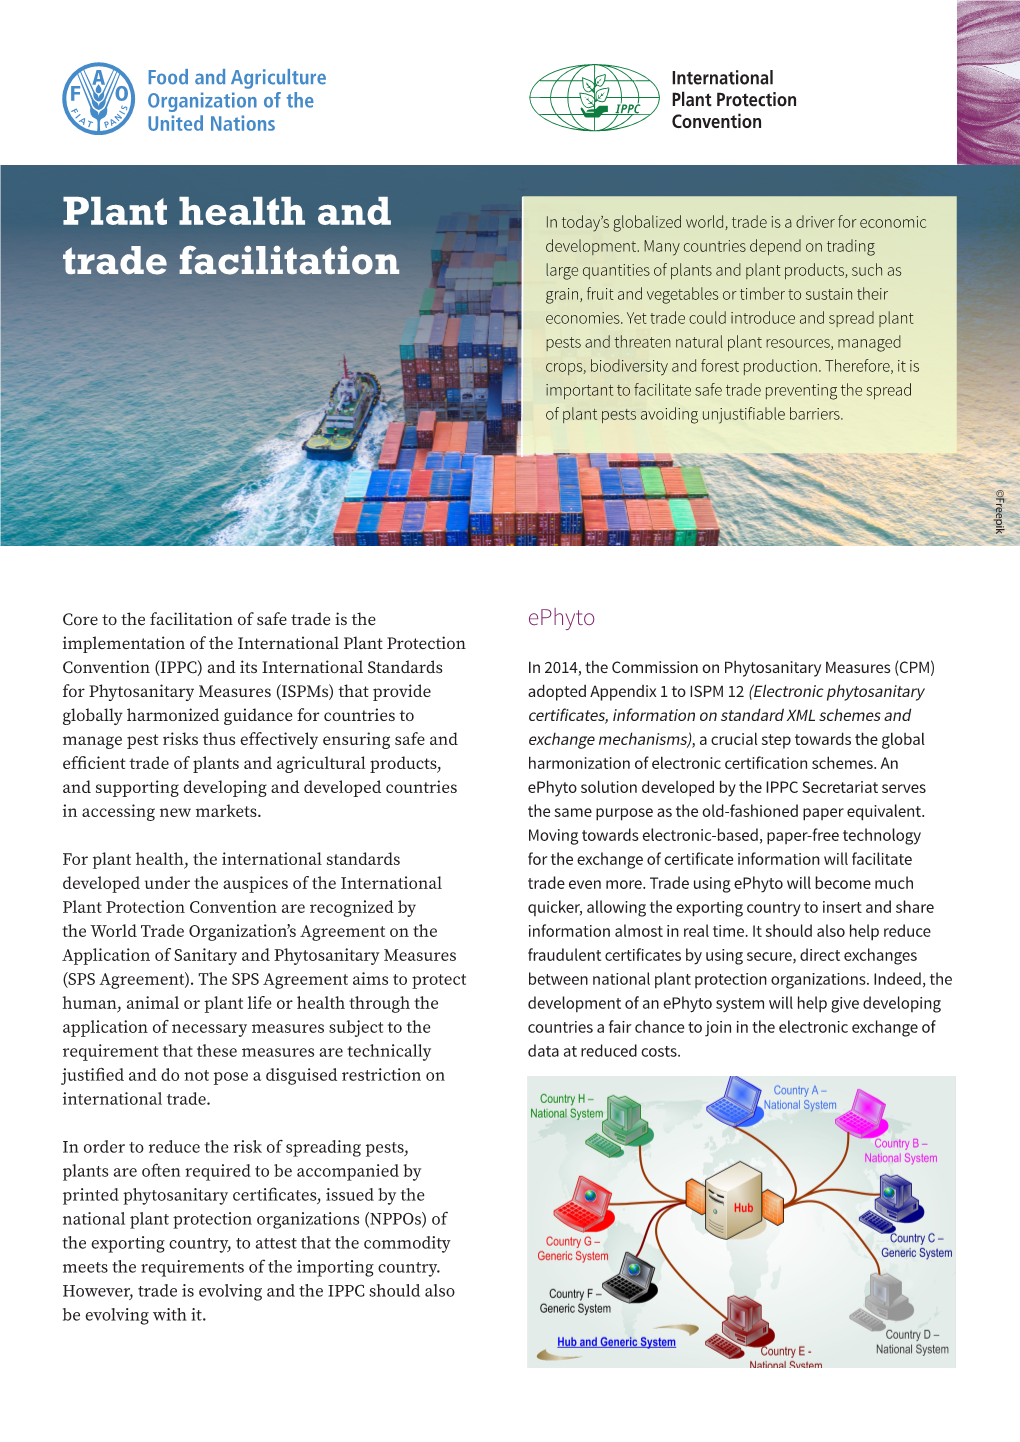 Plant Health and Trade Facilitation